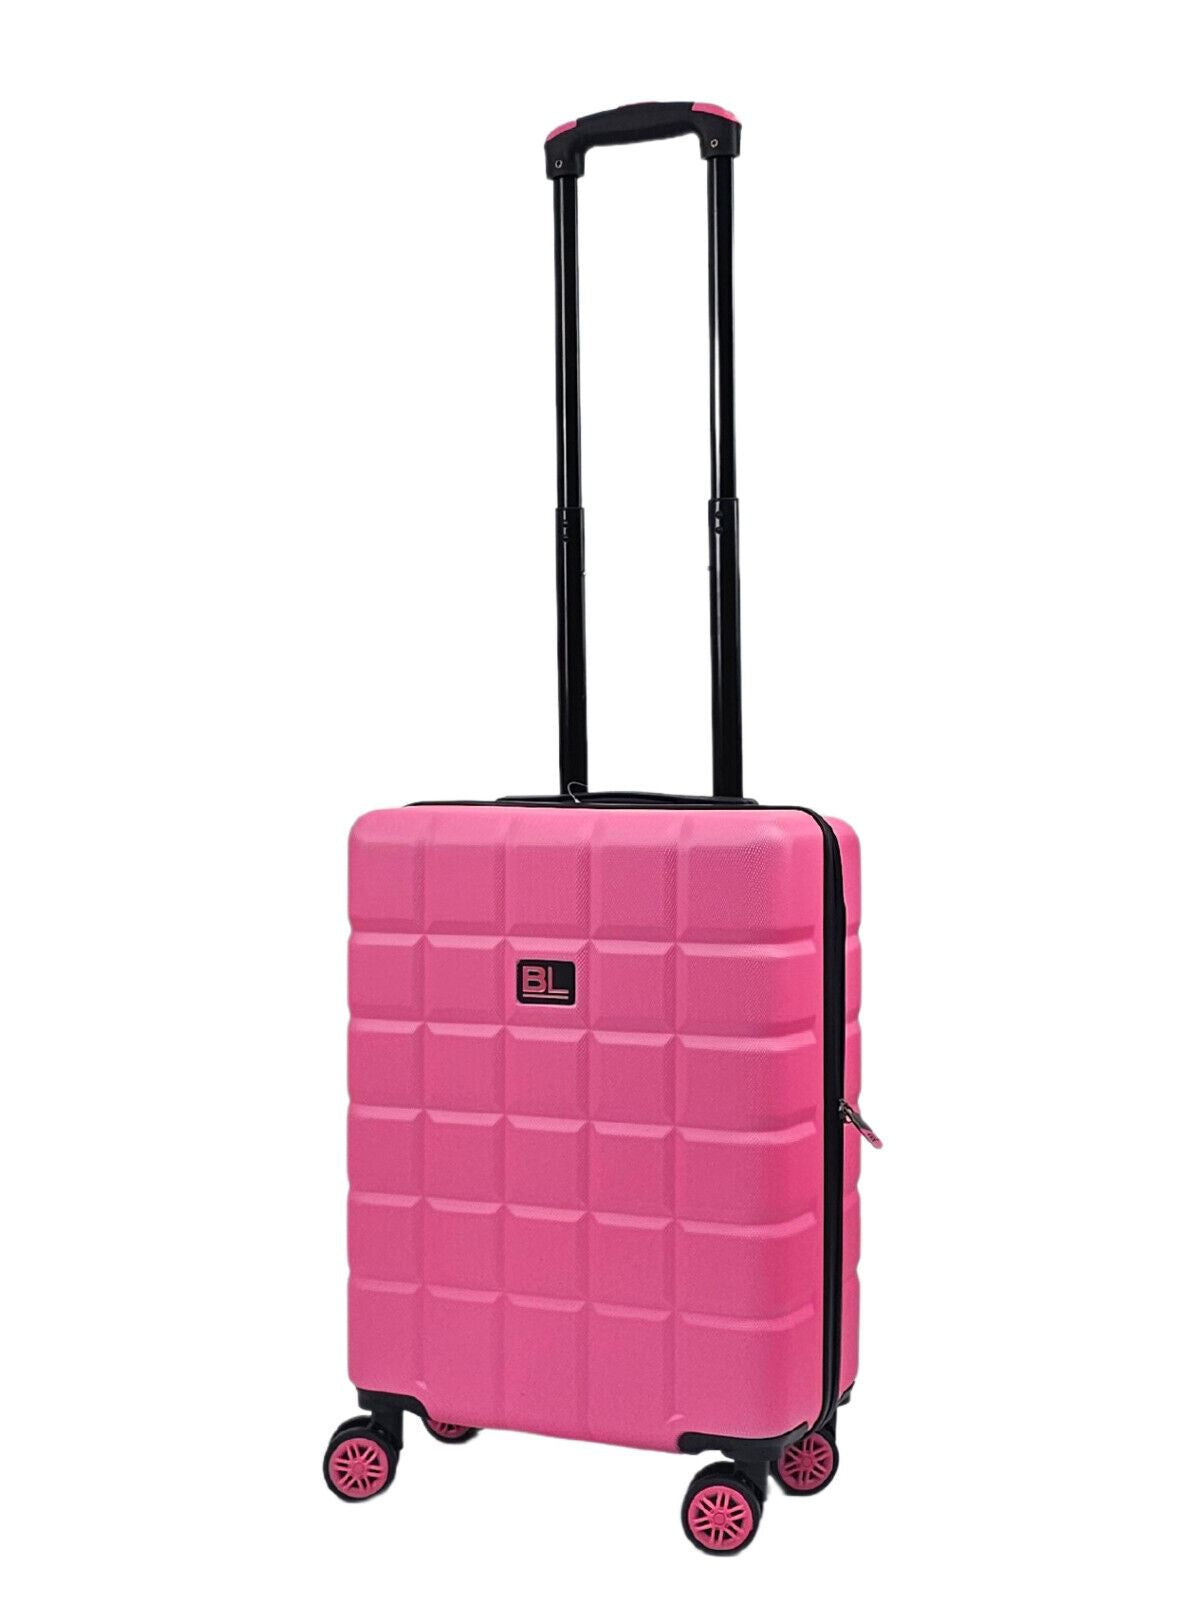 Hard Shell Classic Suitcase Set 8 Wheel Cabin Luggage Case Travel Bag